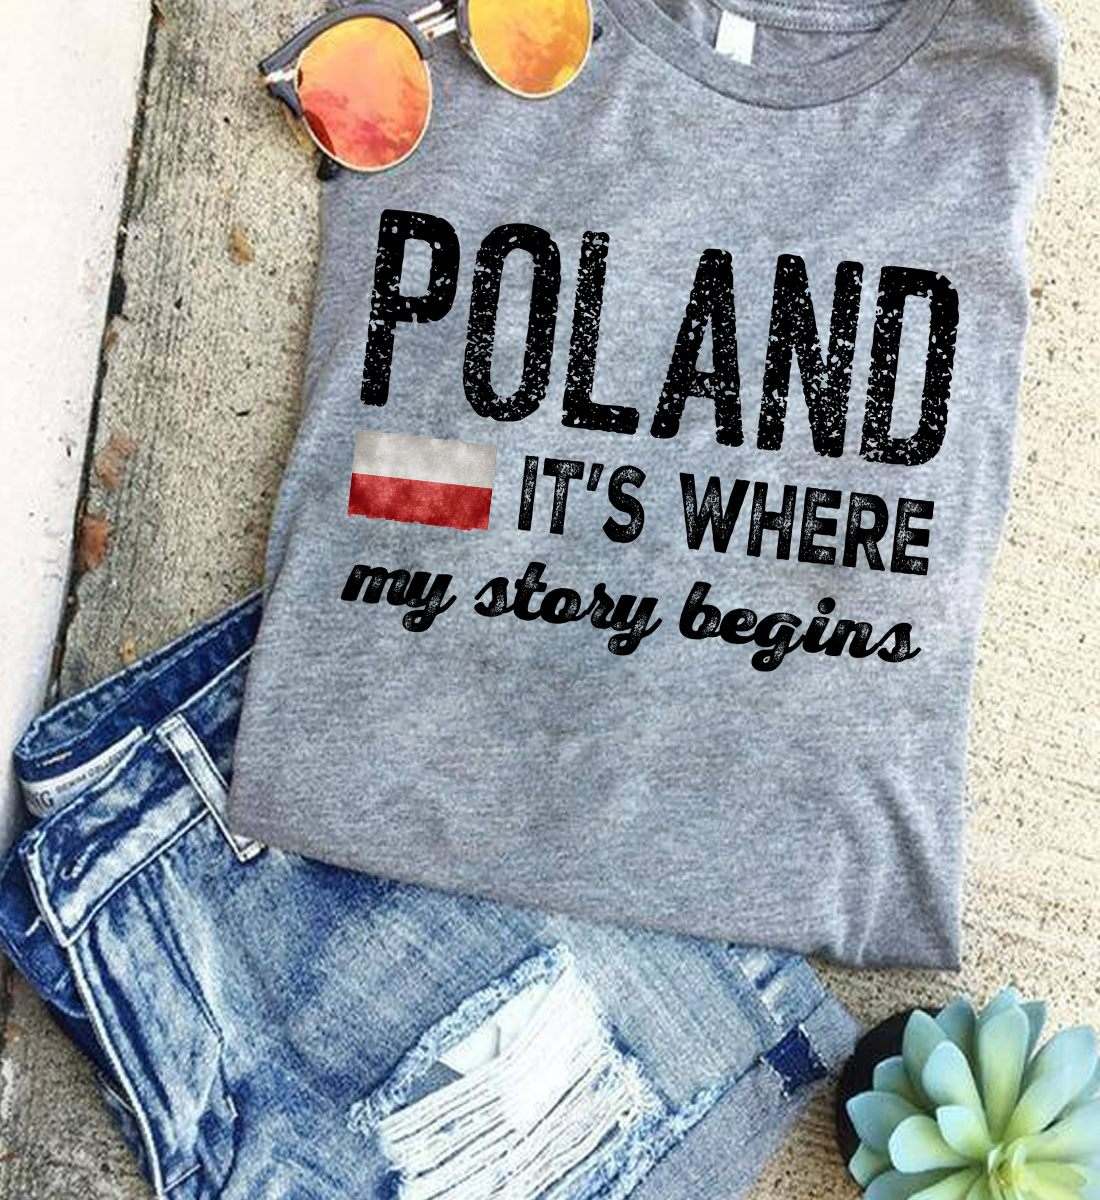 Poland it's where my story begins - Poland flag